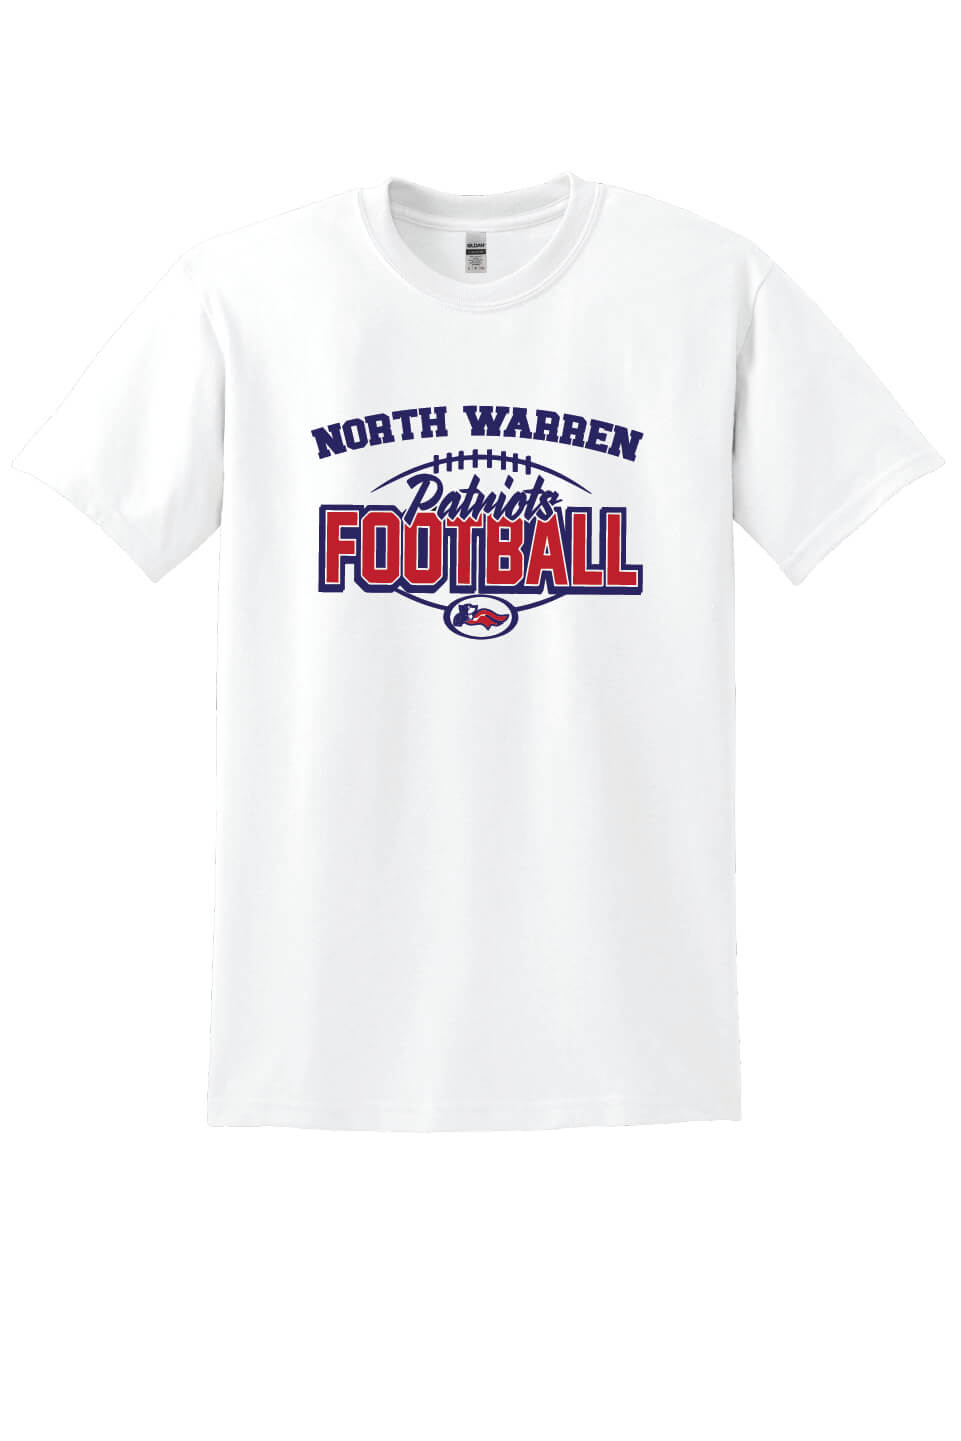 NW Patriots Football Short Sleeve T-shirts (Youth) white